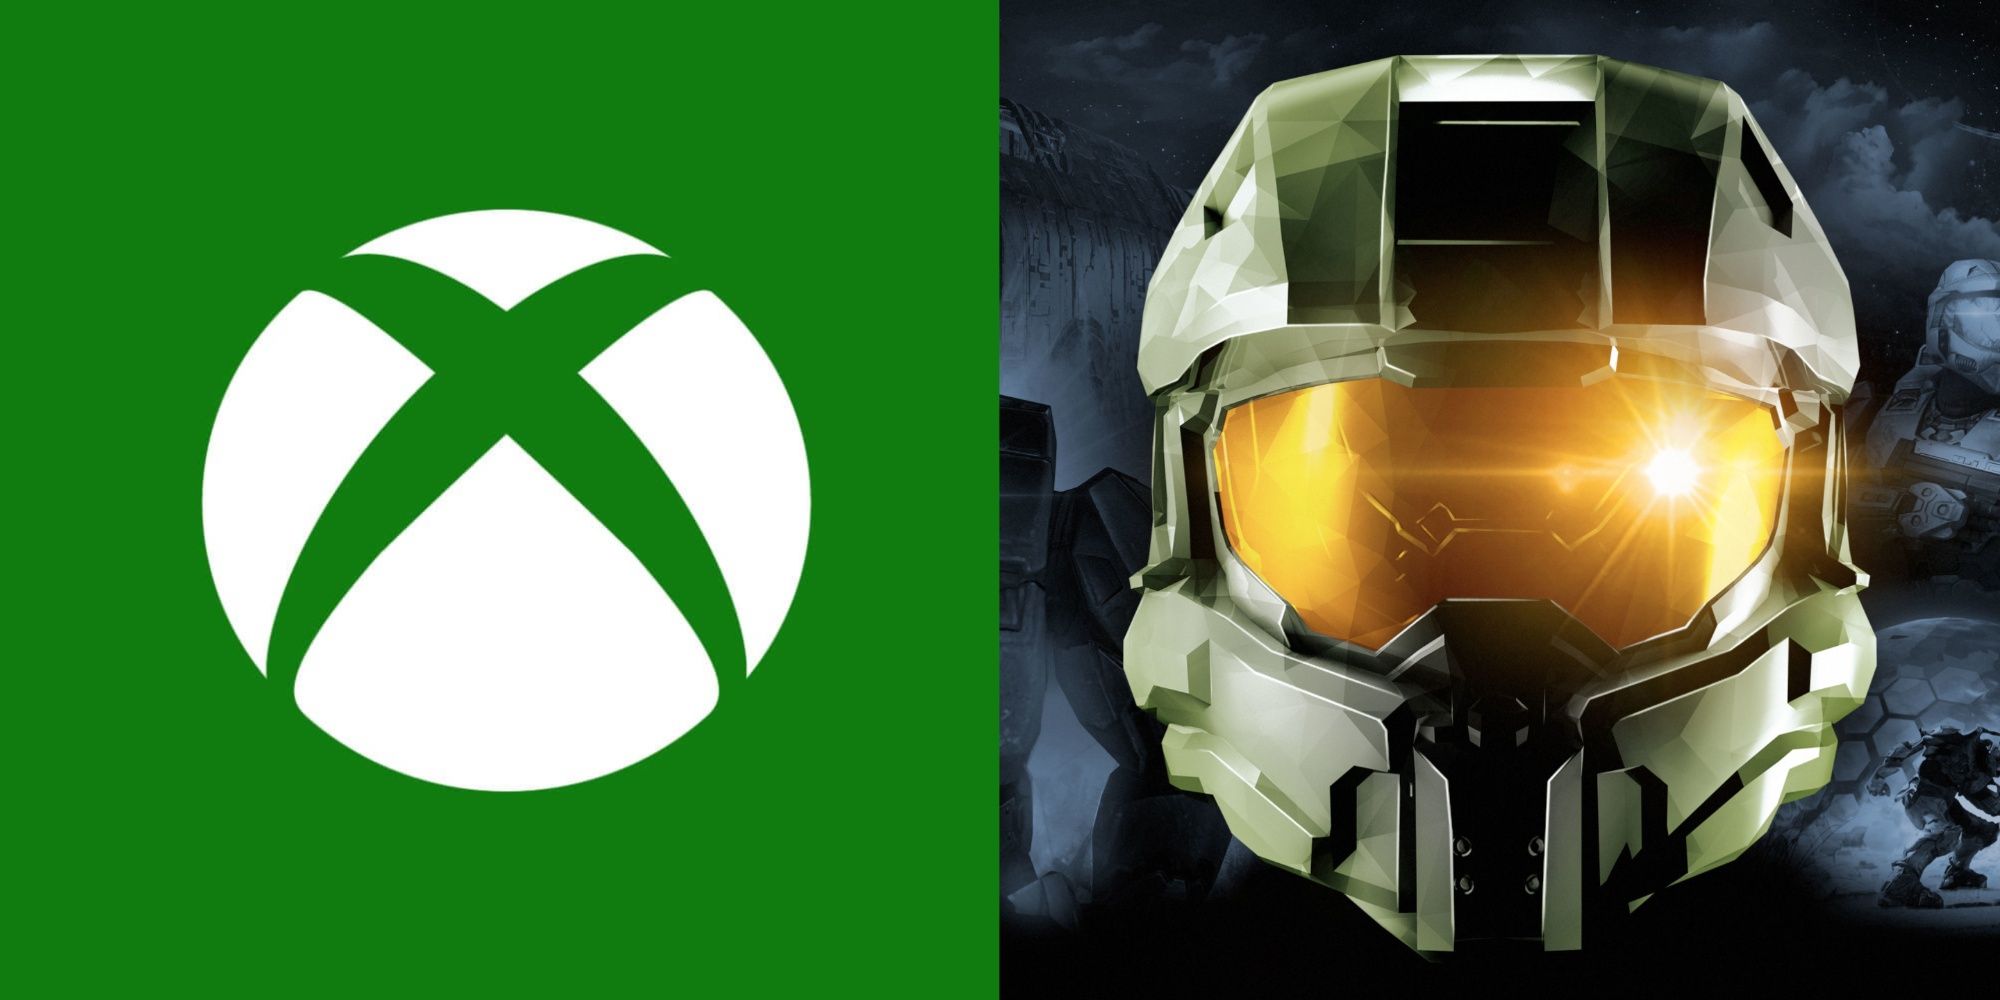 Xbox Logo and Masterchief's helmet